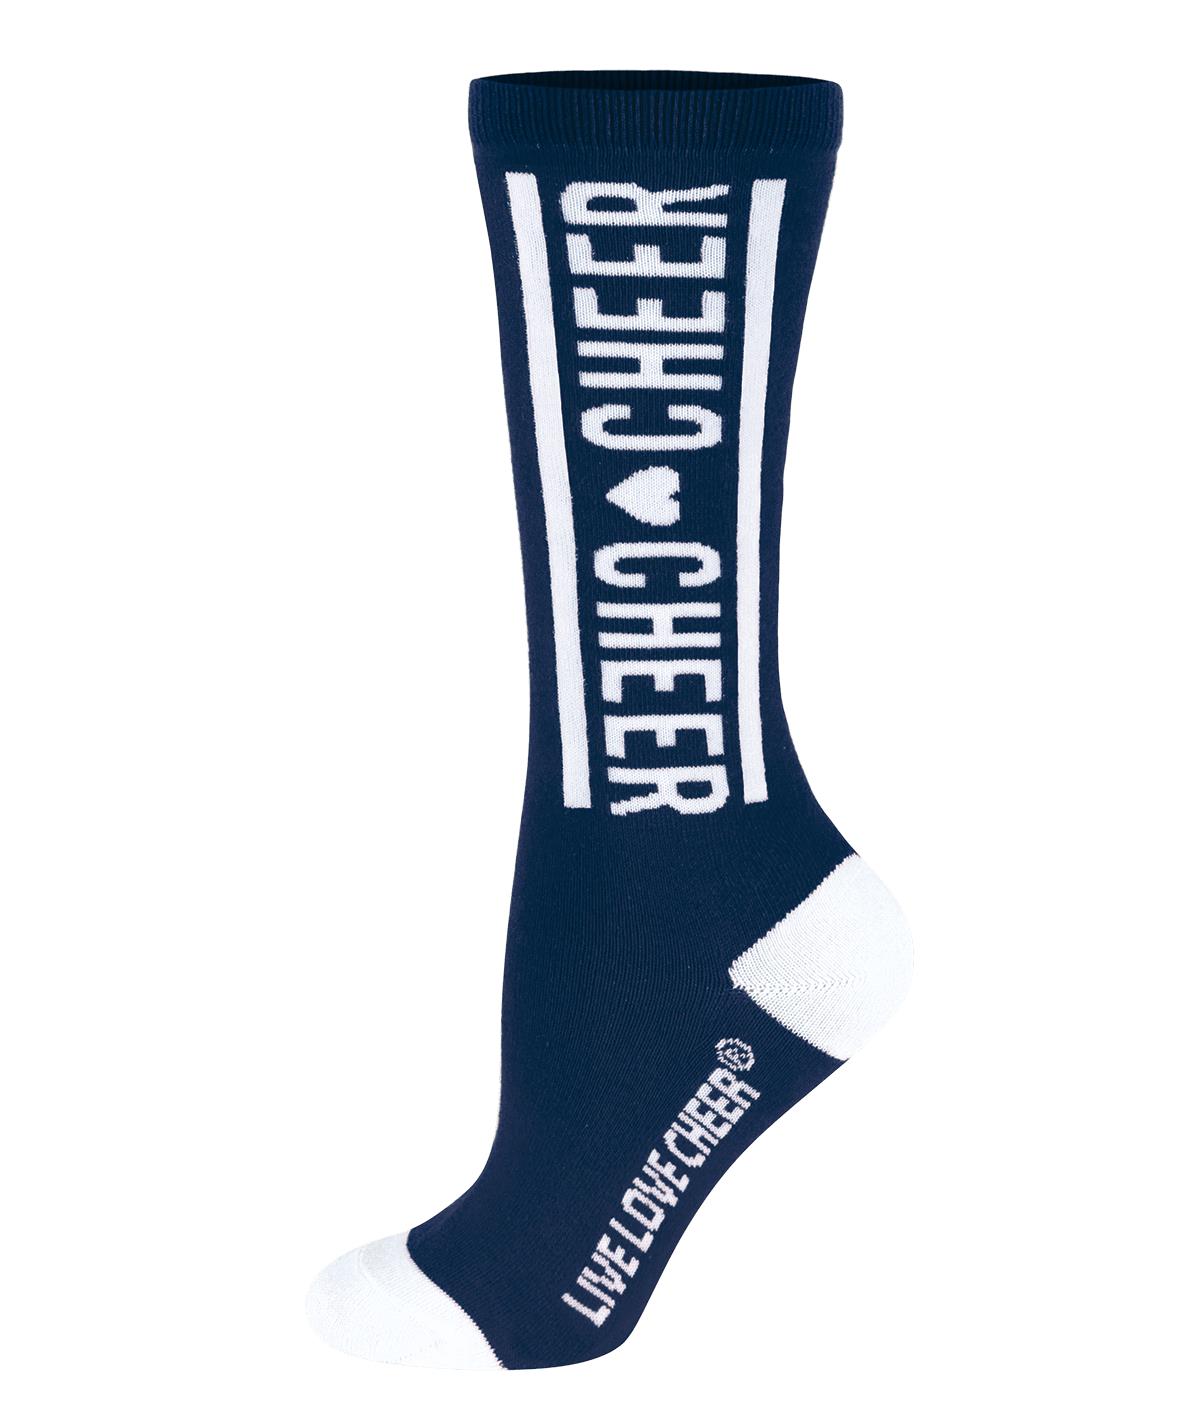 Chasse Knee-High Cheer Sock